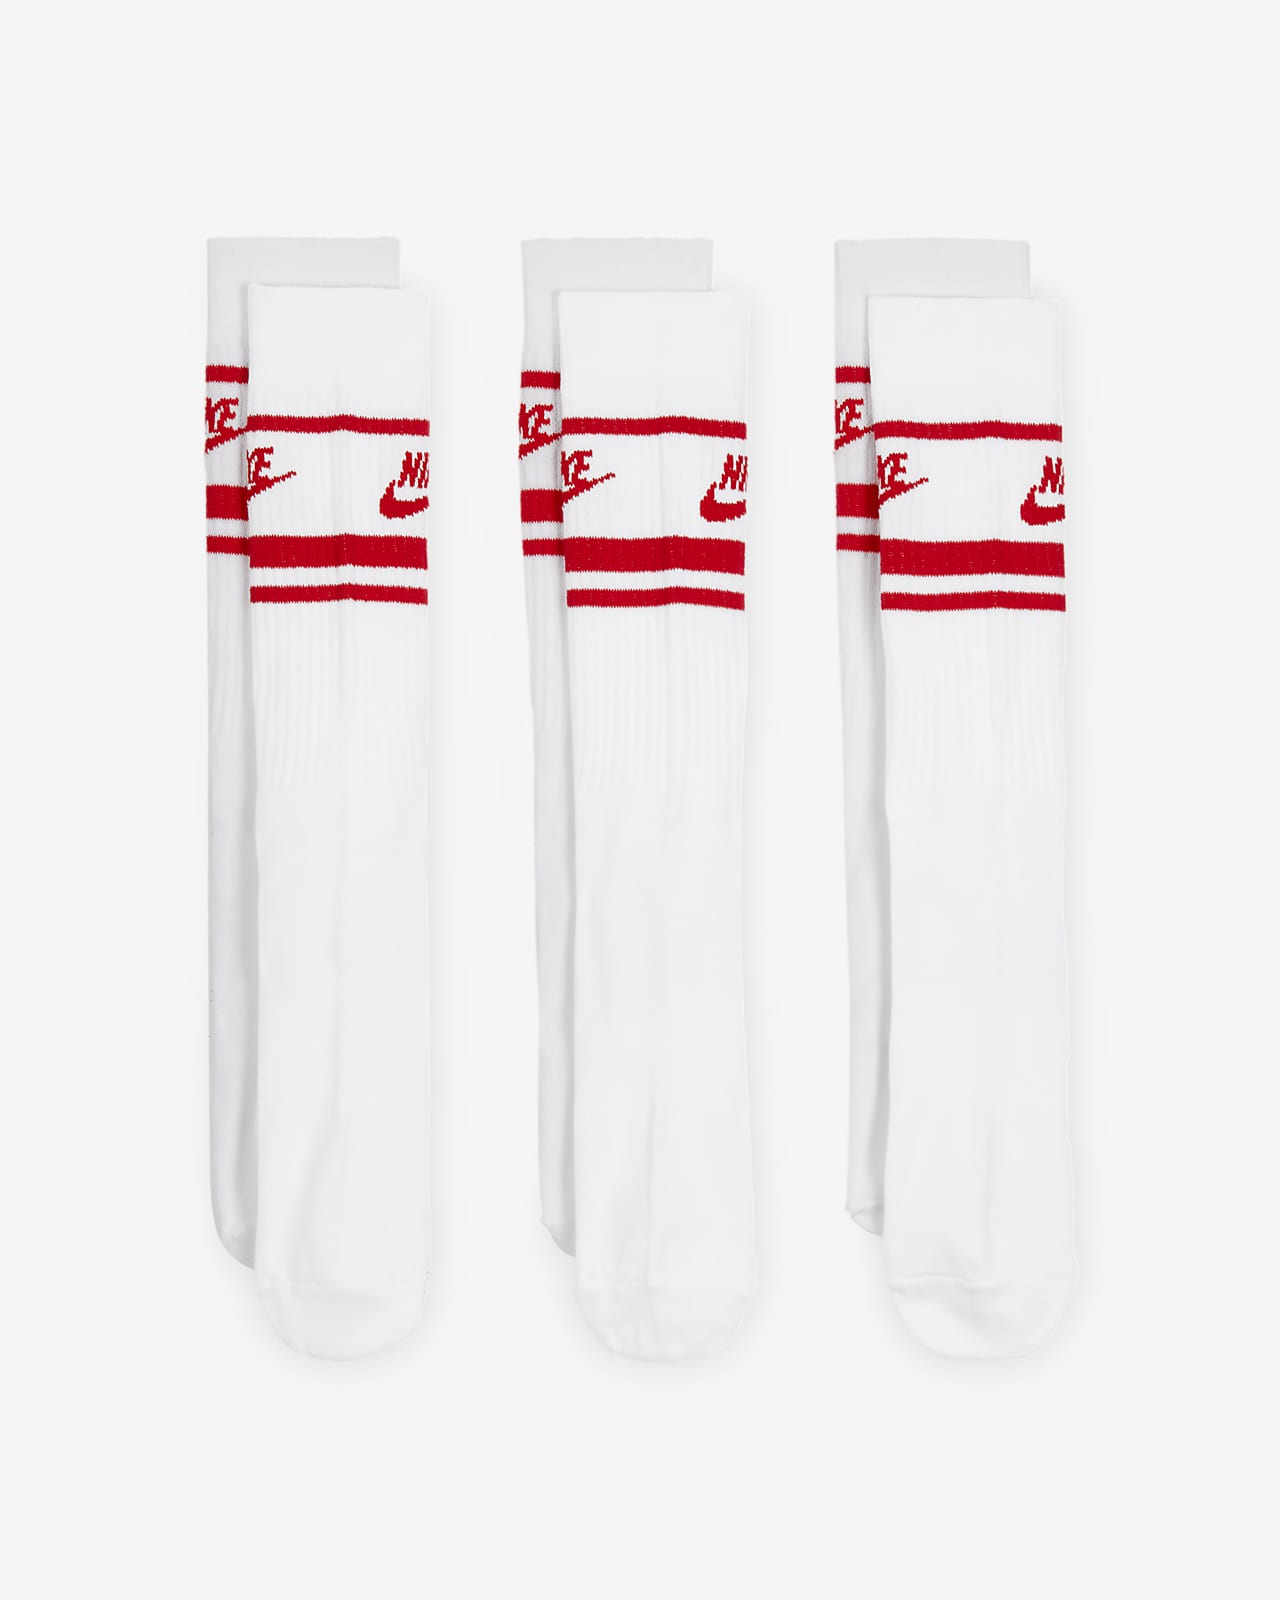 Nike Sportswear Dri-FIT Everyday Essential Crew Socks (3 Pairs). Nike AU